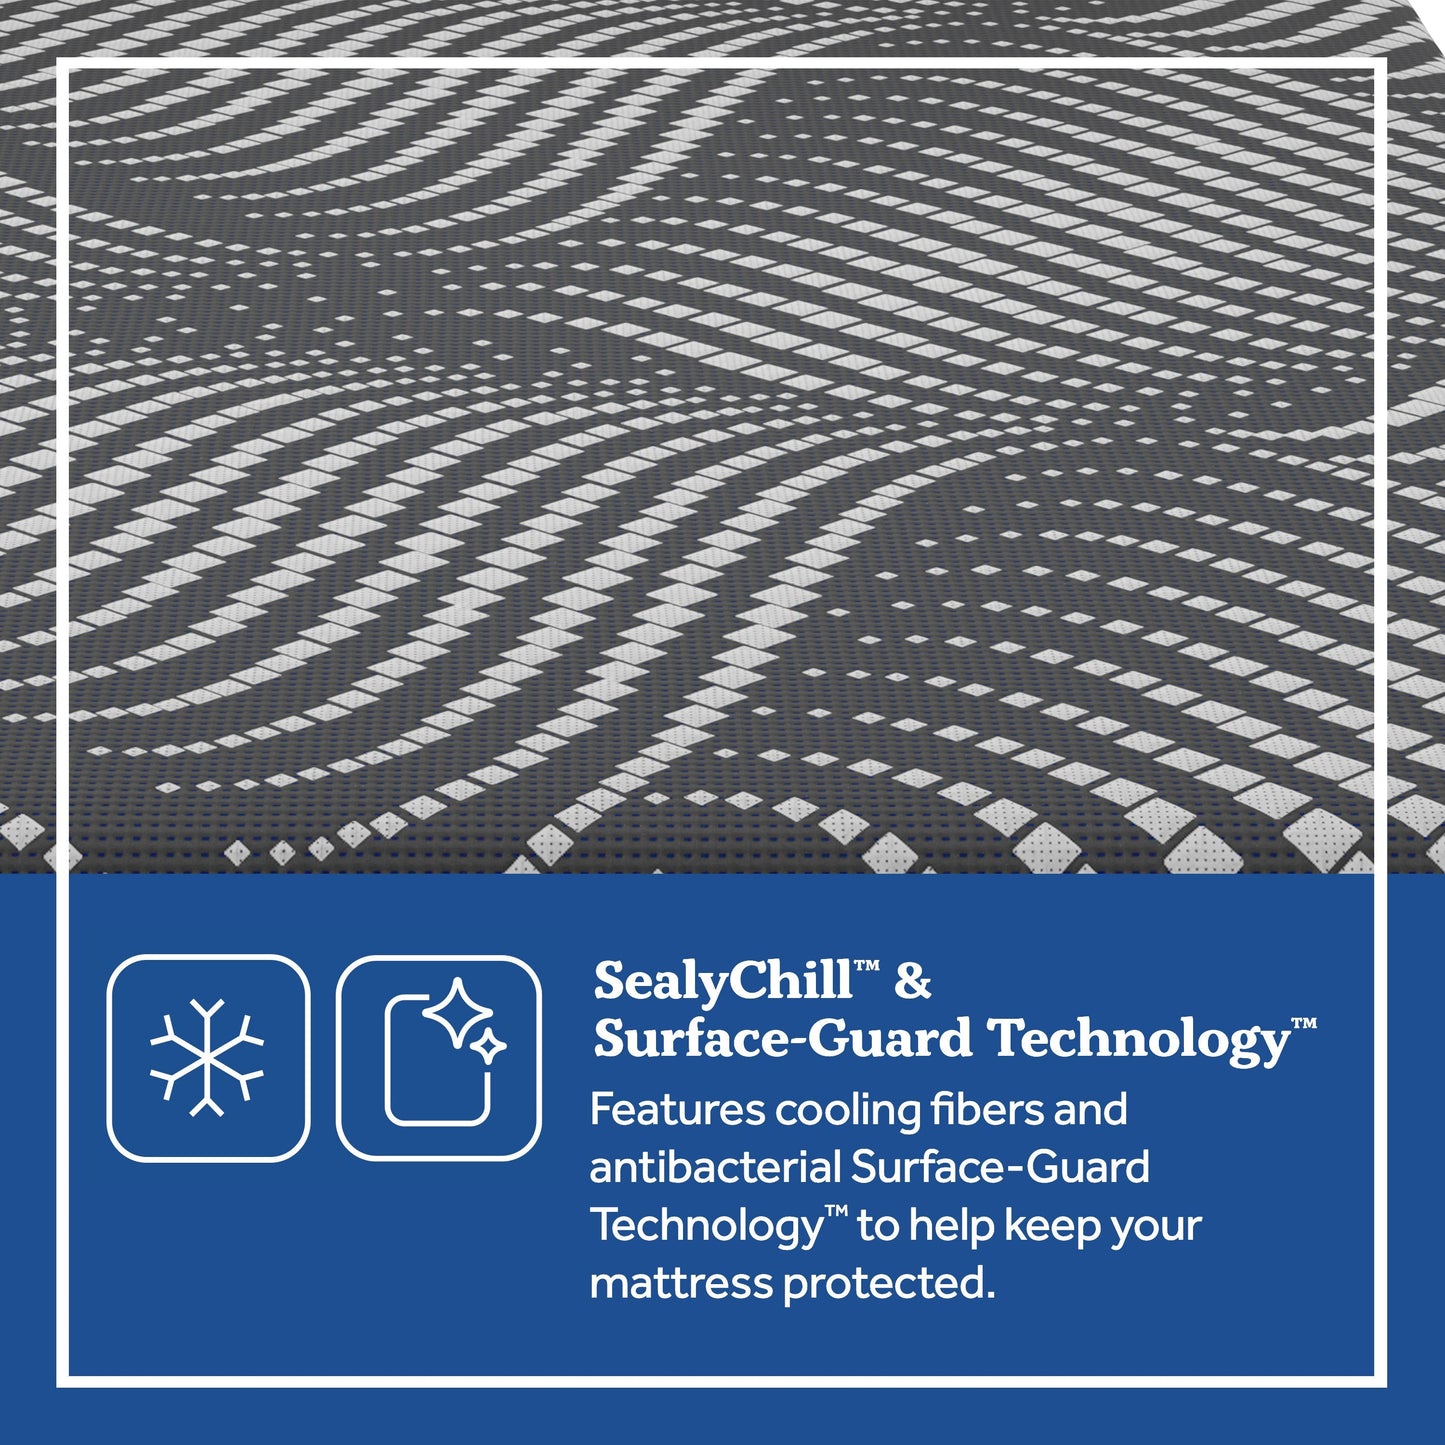 Sealy High Point Ultra Soft Mattress SealyChill Surface-Guard Technology badge